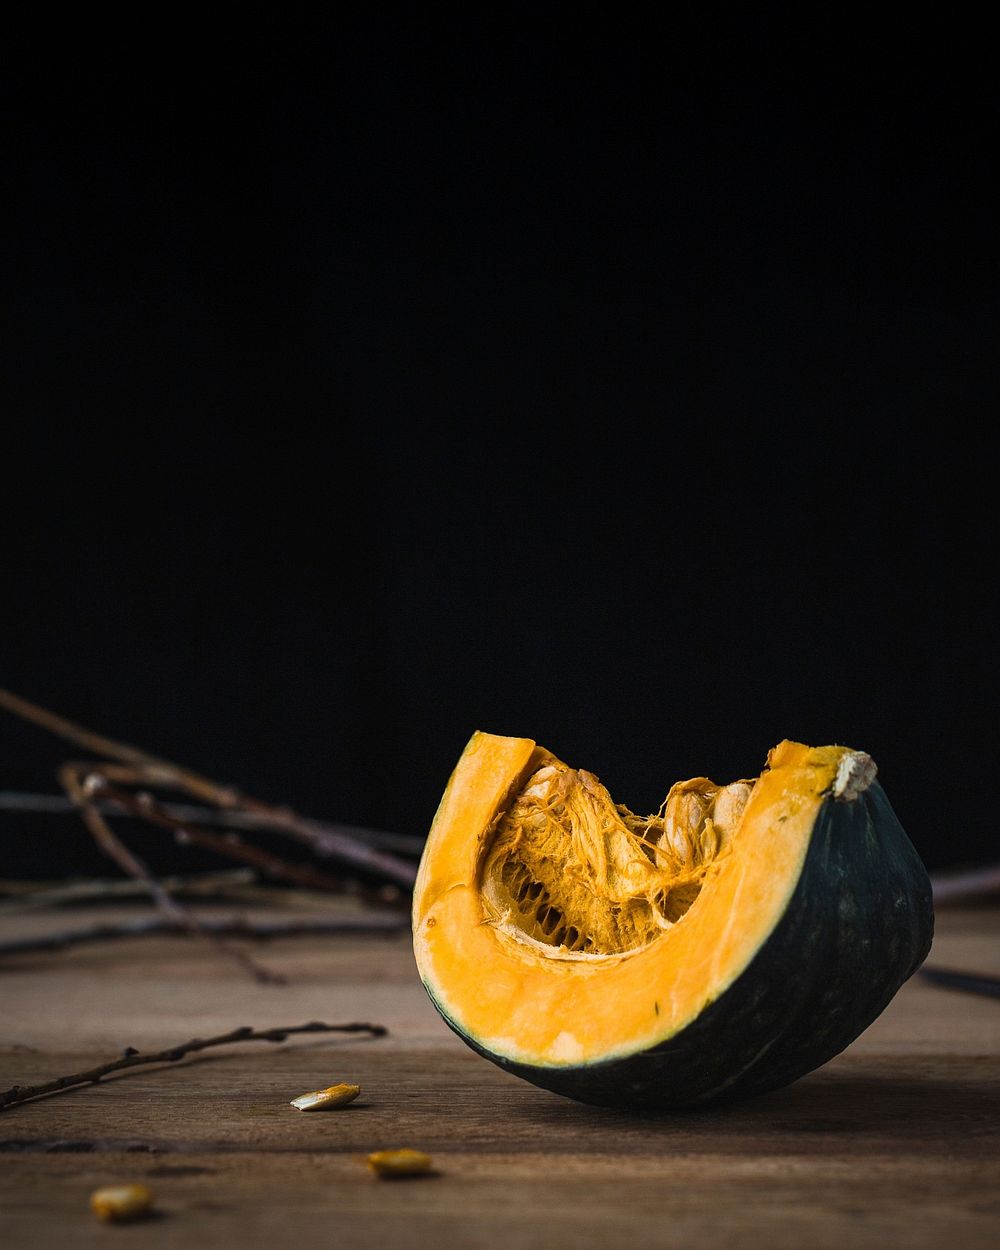 Free pumpkin slice image, public domain vegetable CC0 photo